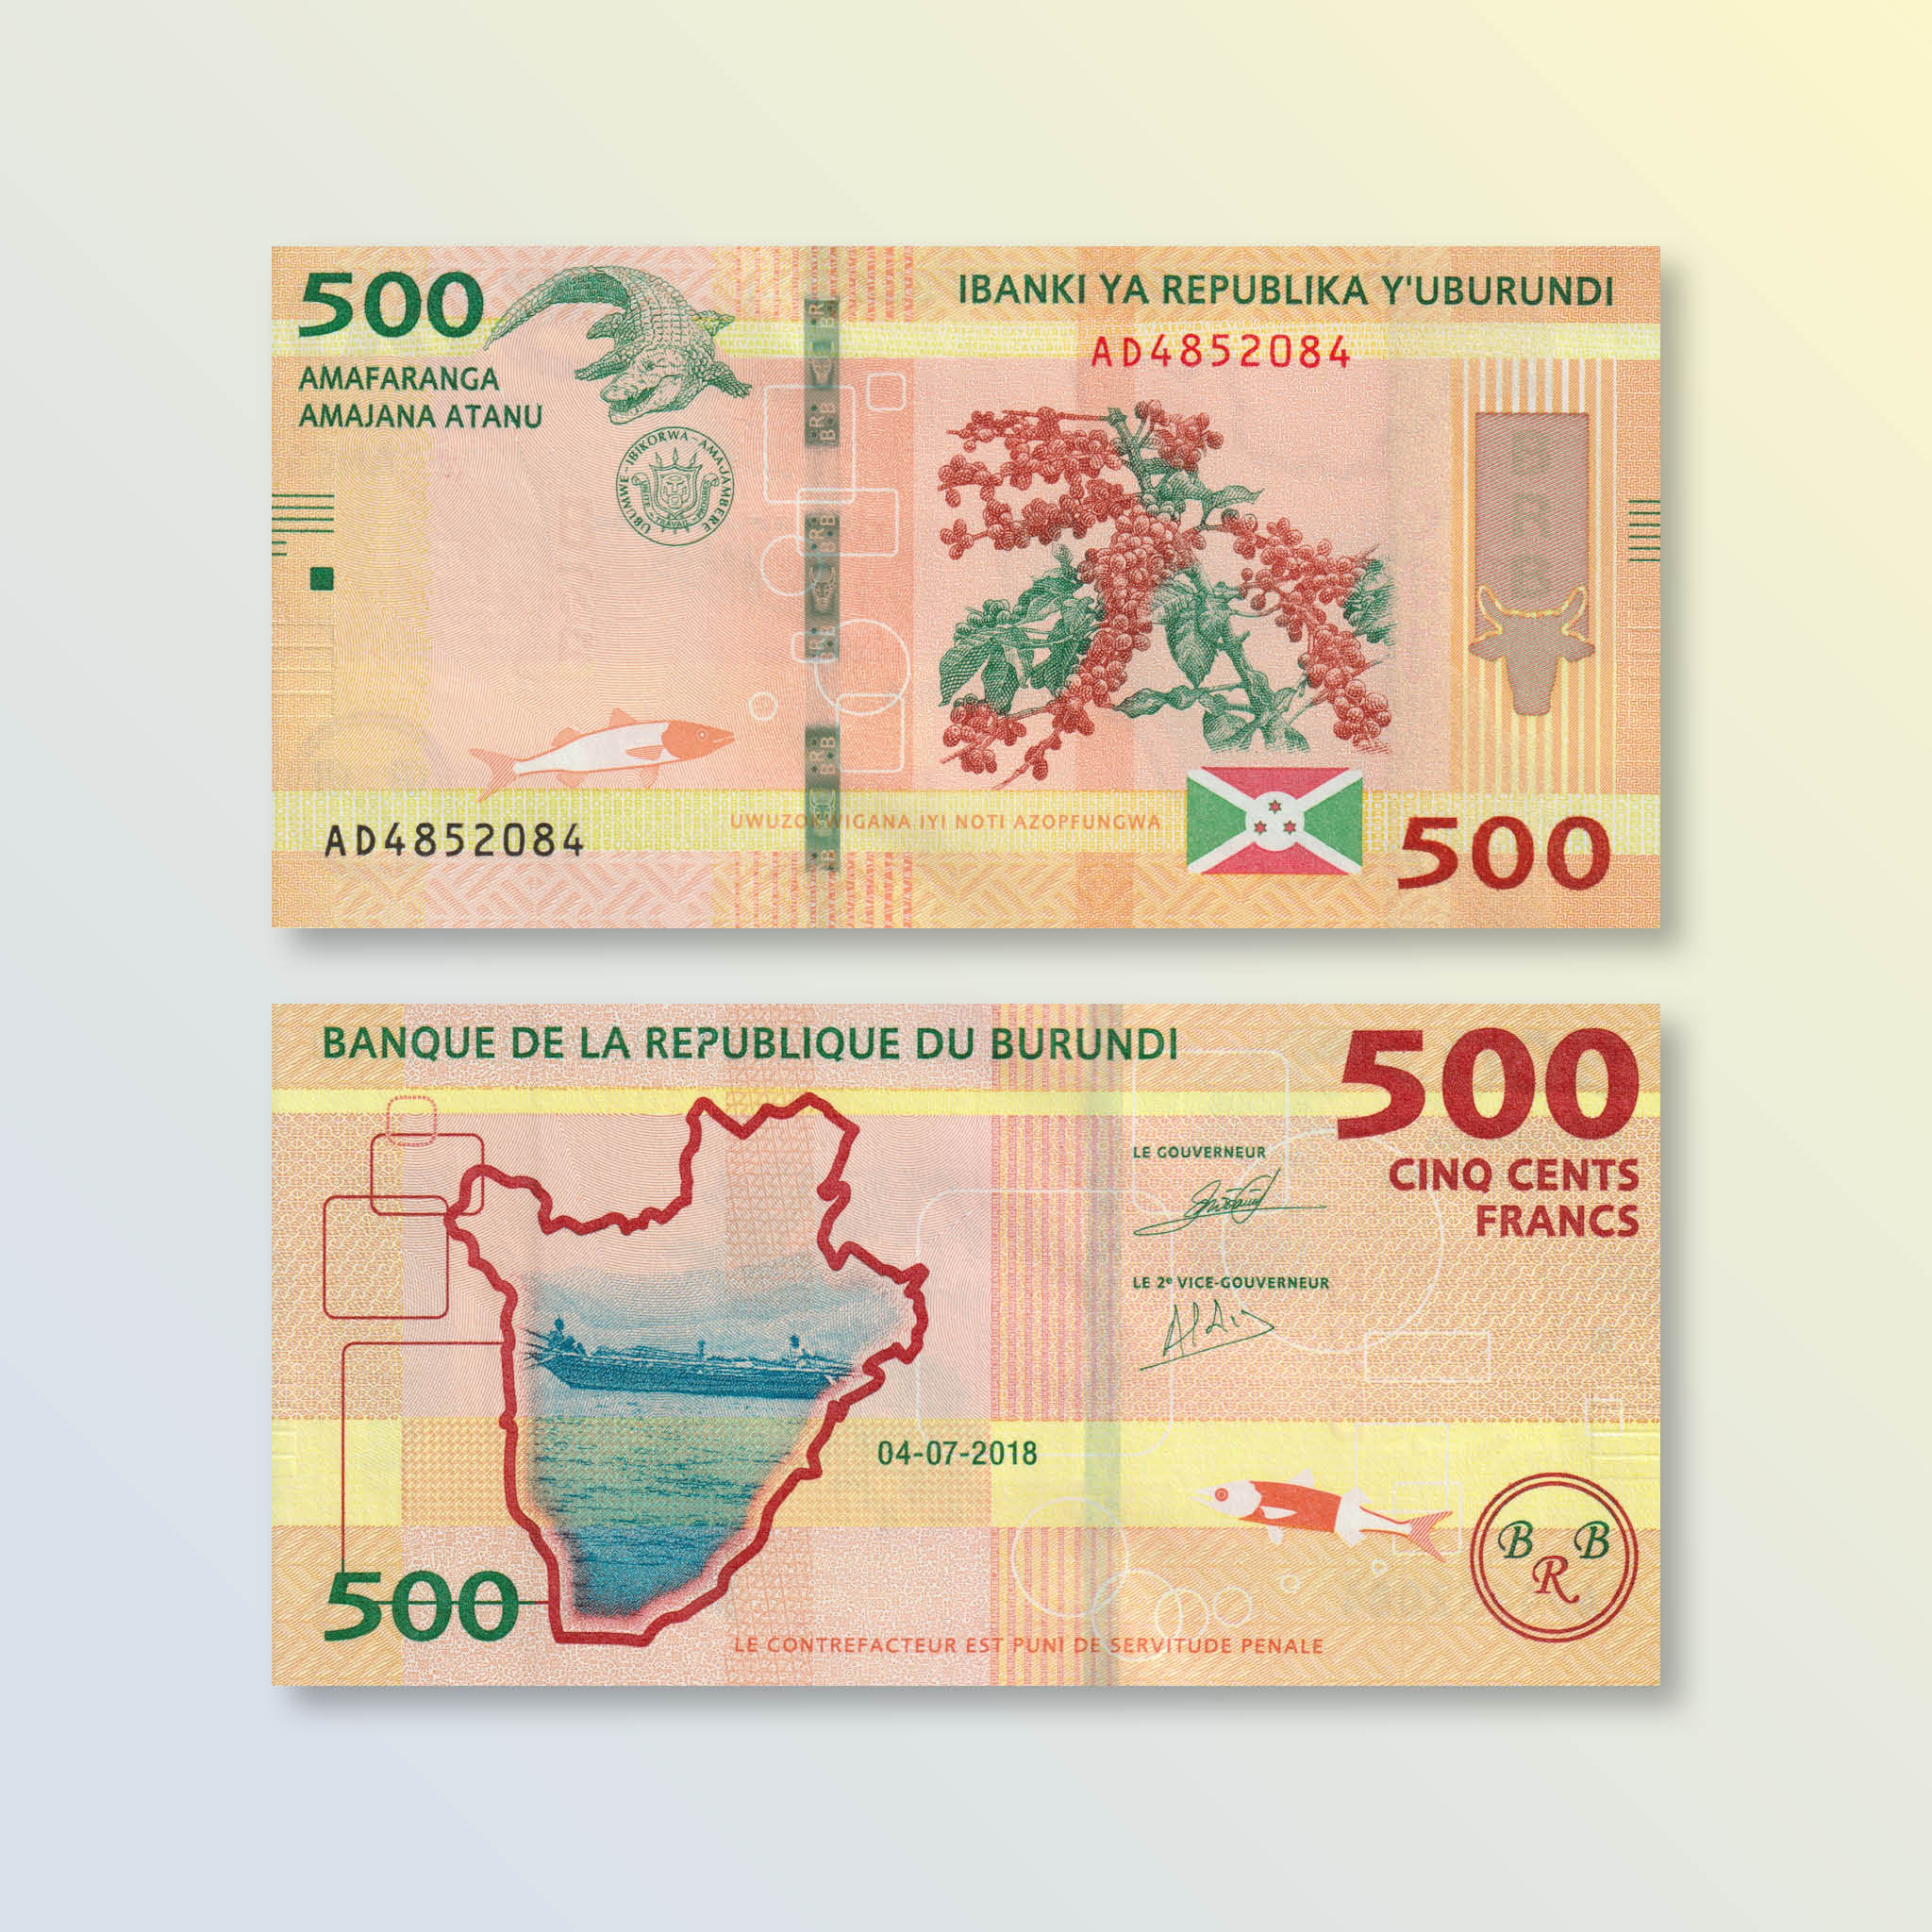 Burundi 500 Francs, 2018, B236b, P50, UNC - Robert's World Money - World Banknotes